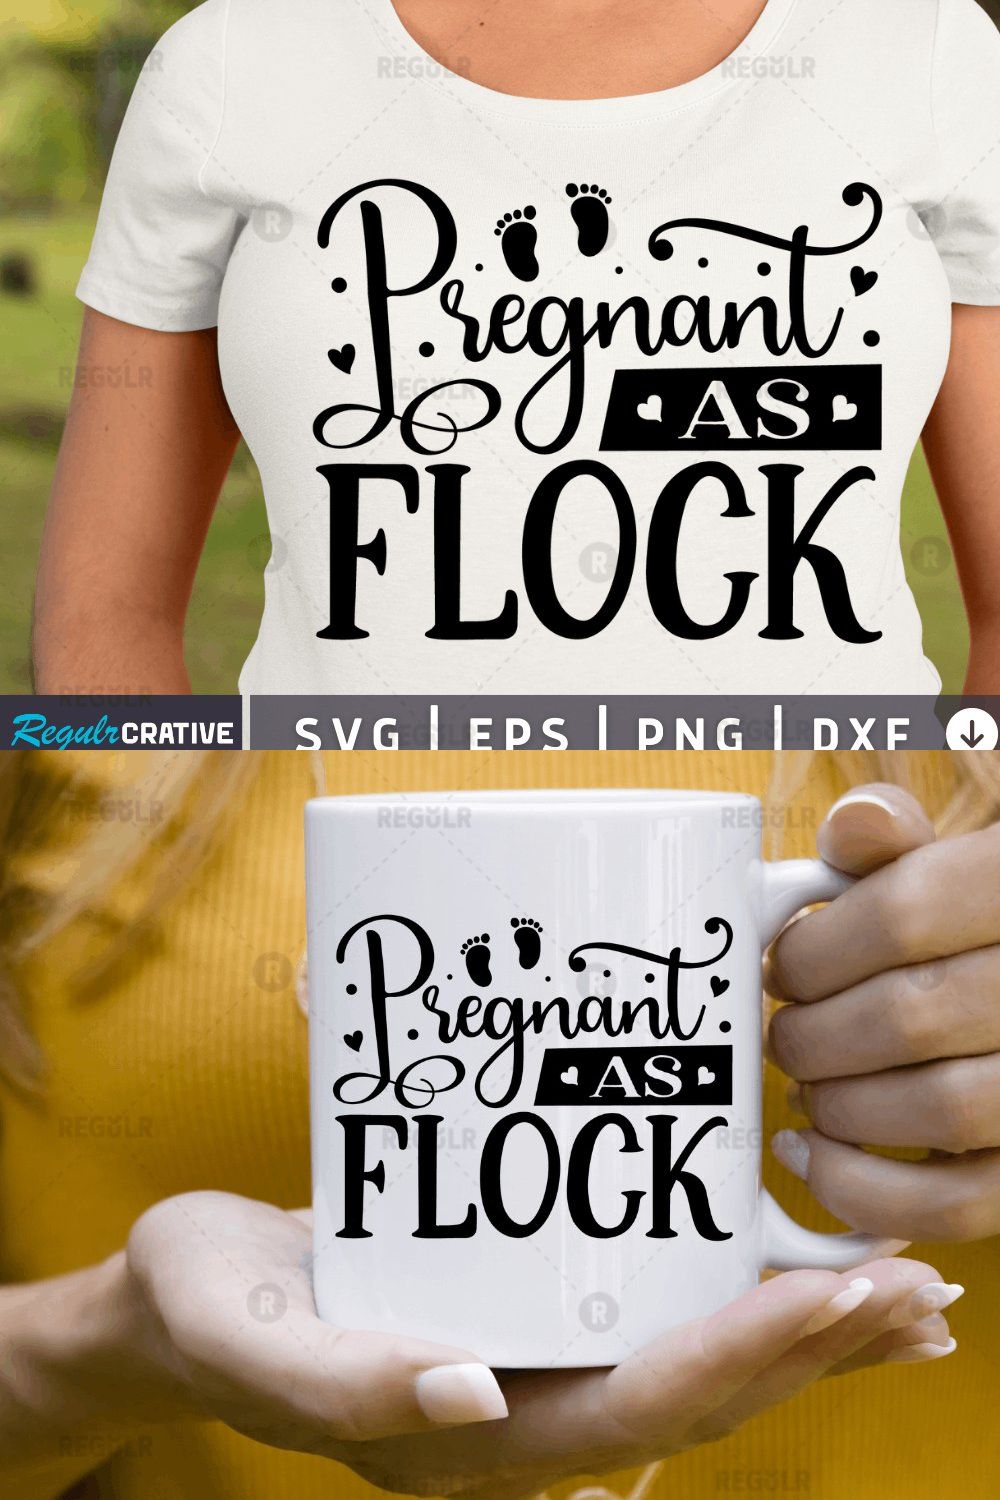 Pregnant as flock SVG pinterest preview image.